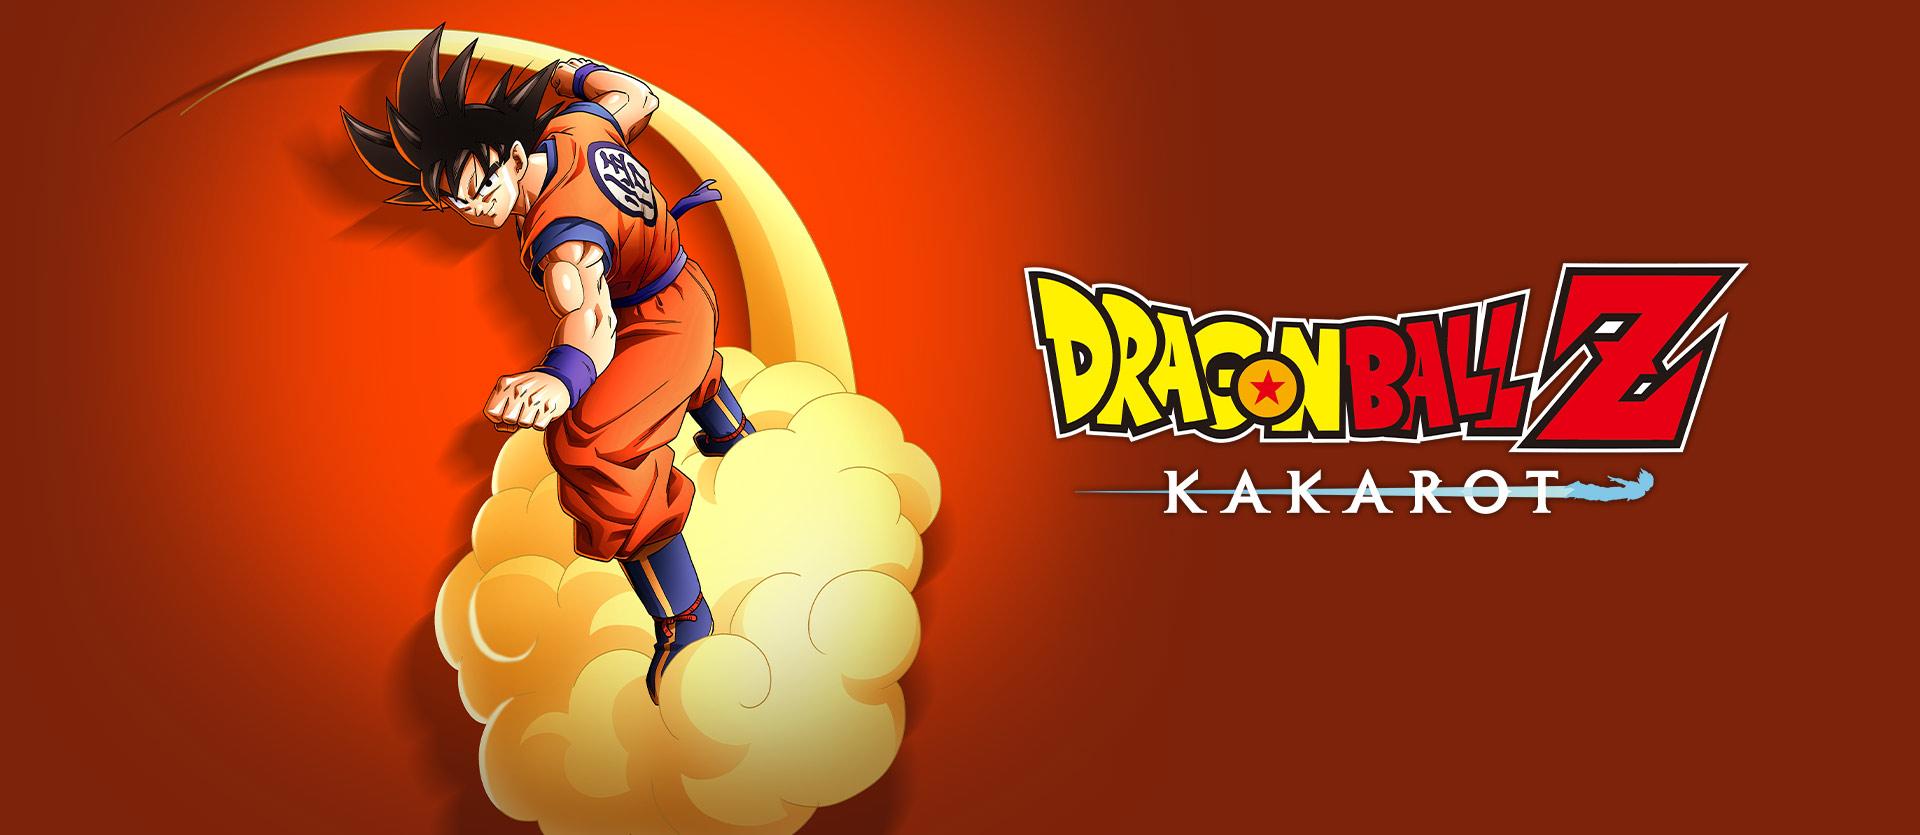 DRAGON BALL Z: KAKAROT! for Xbox One